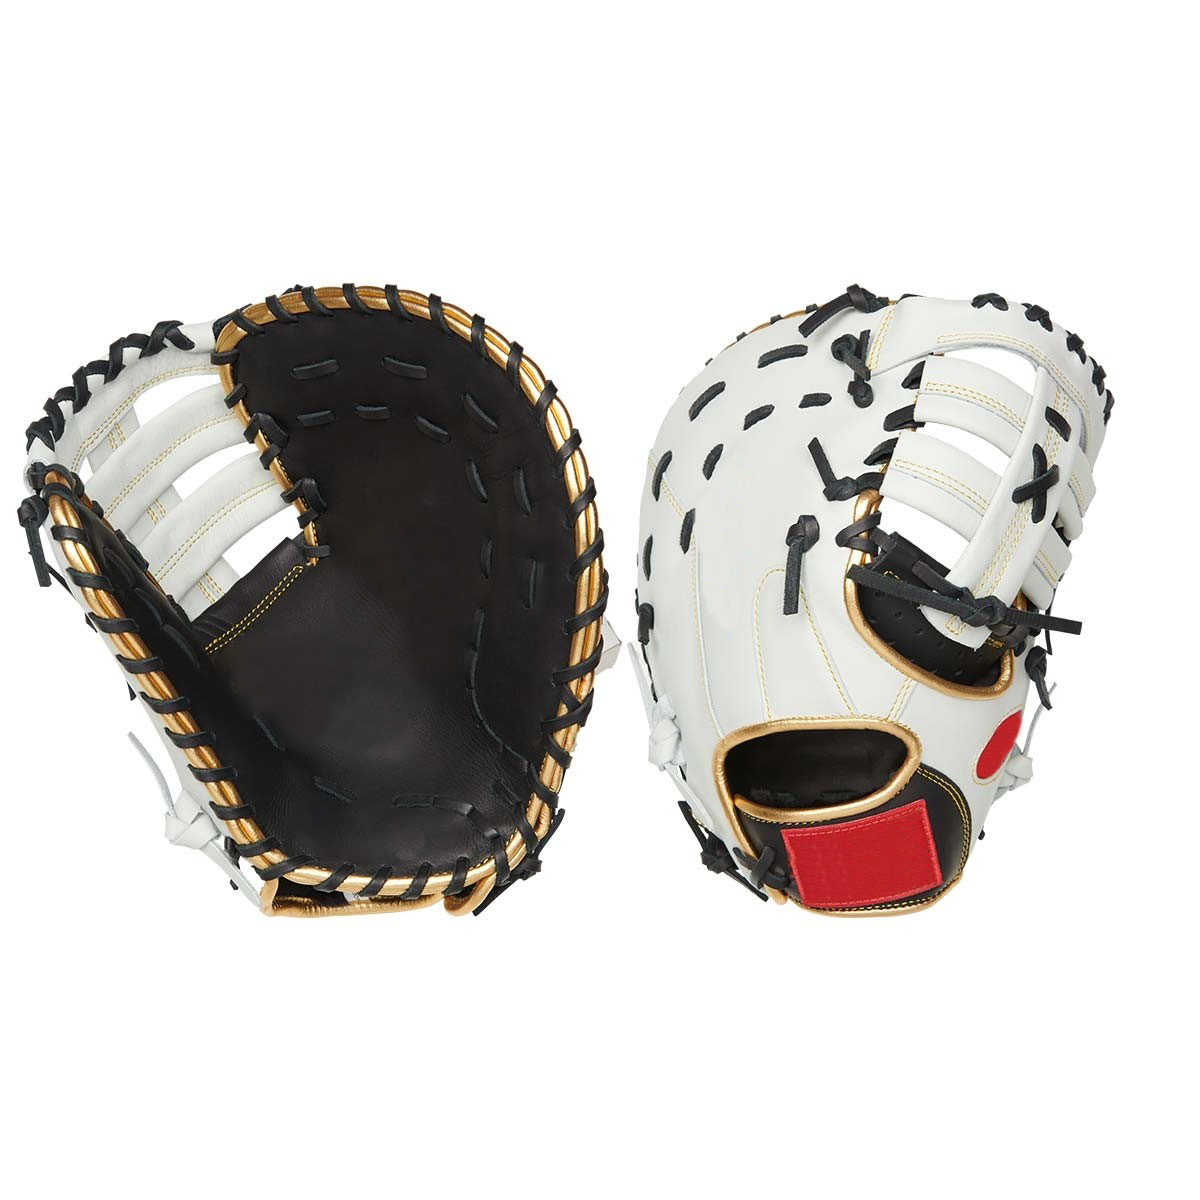 All leather construction wear-resistant white&black baseball gloves